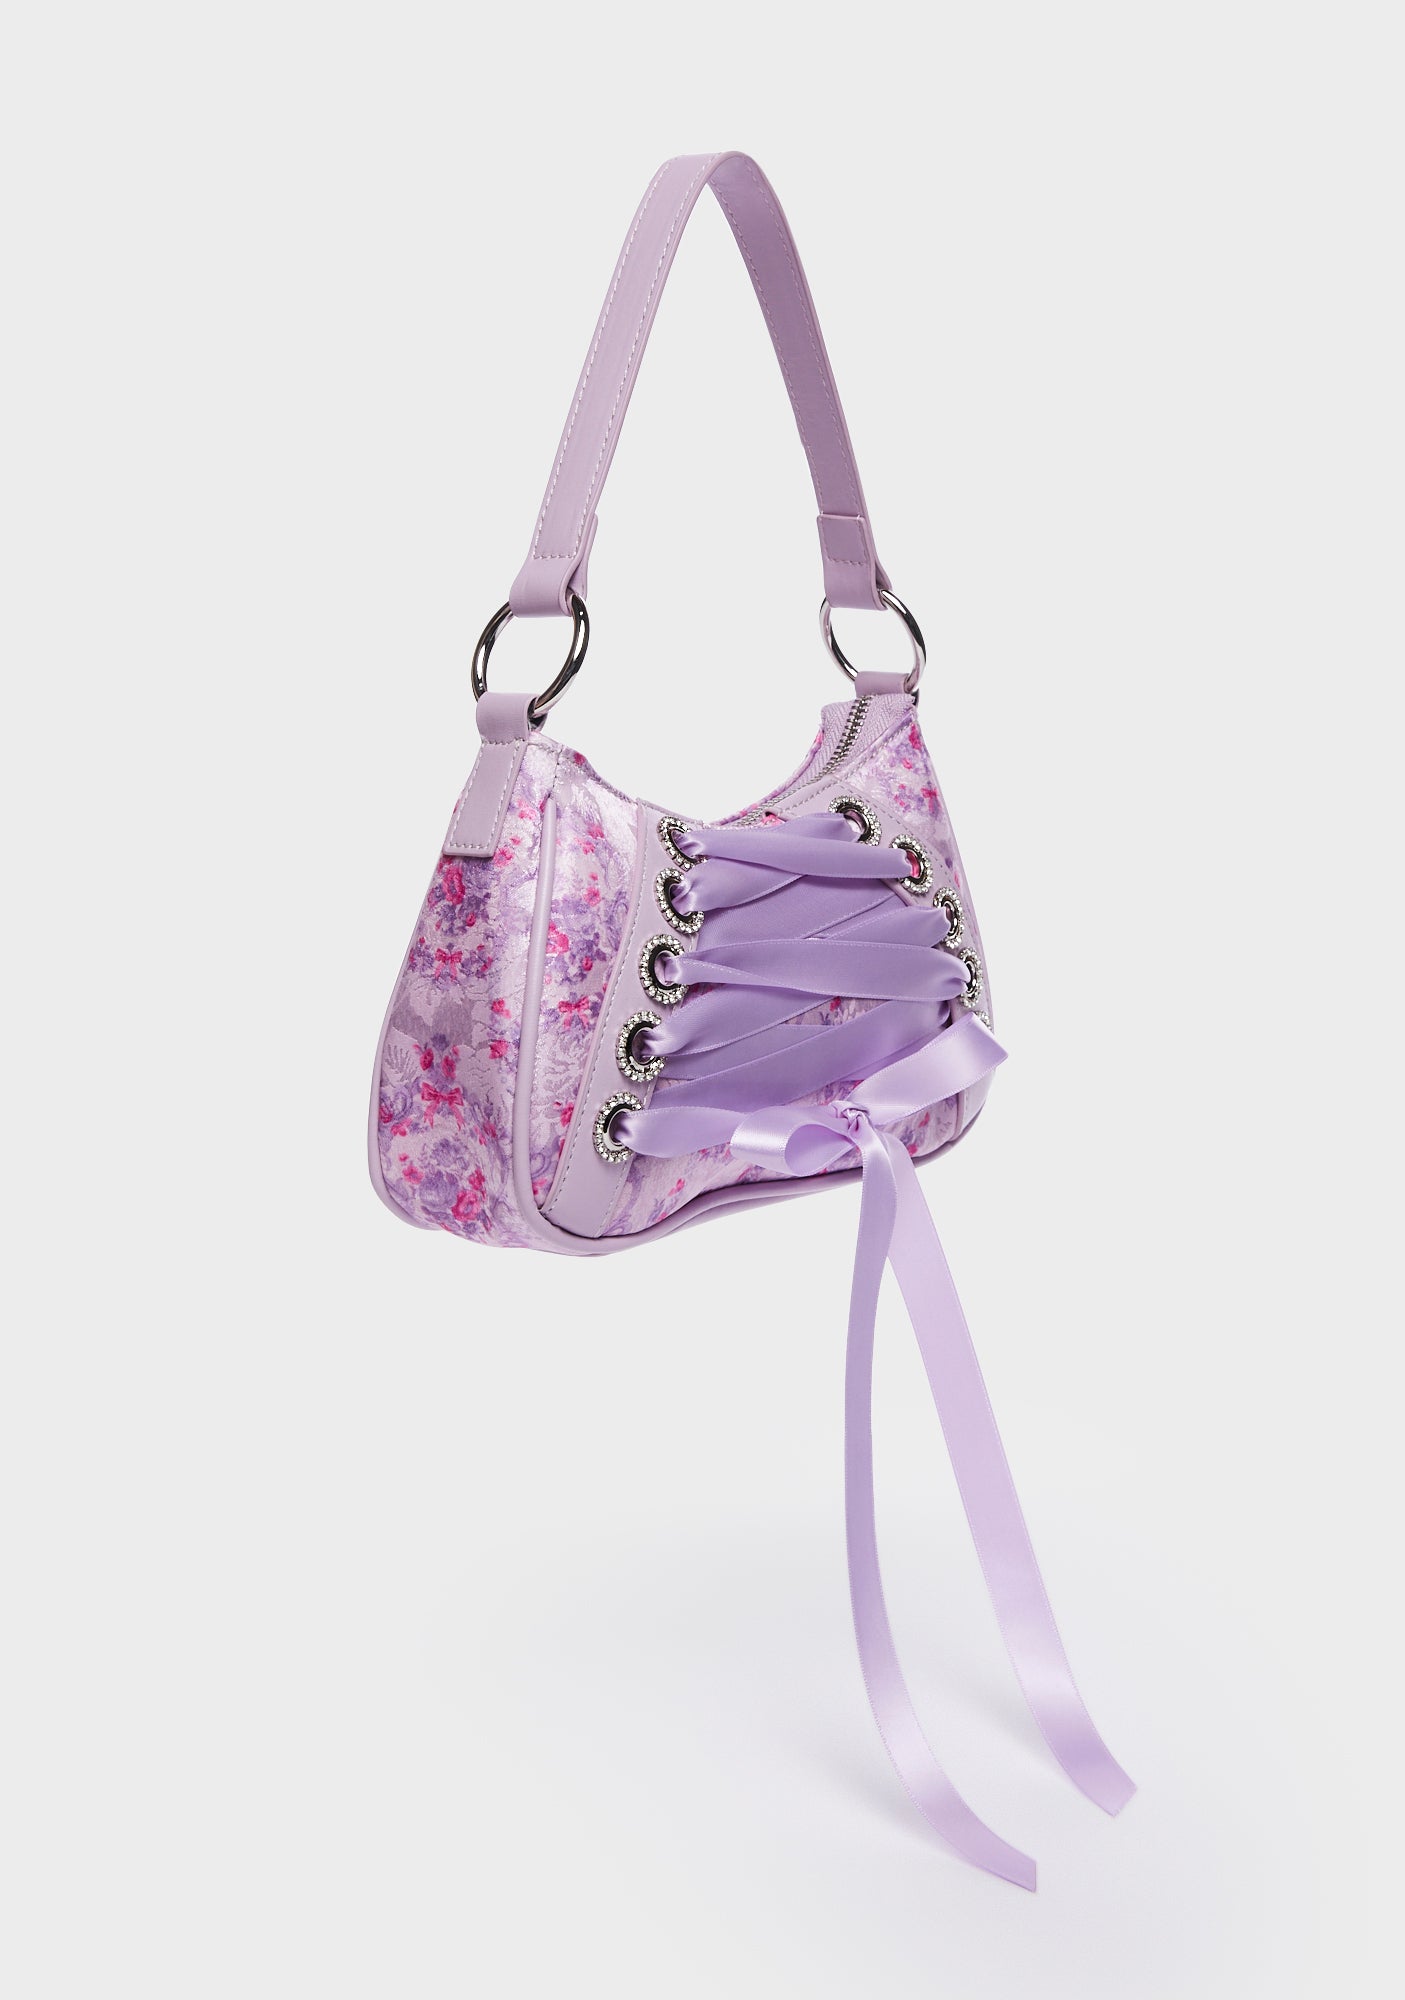 Small handbag/Shoulder bag - Purple/patterned - Ladies